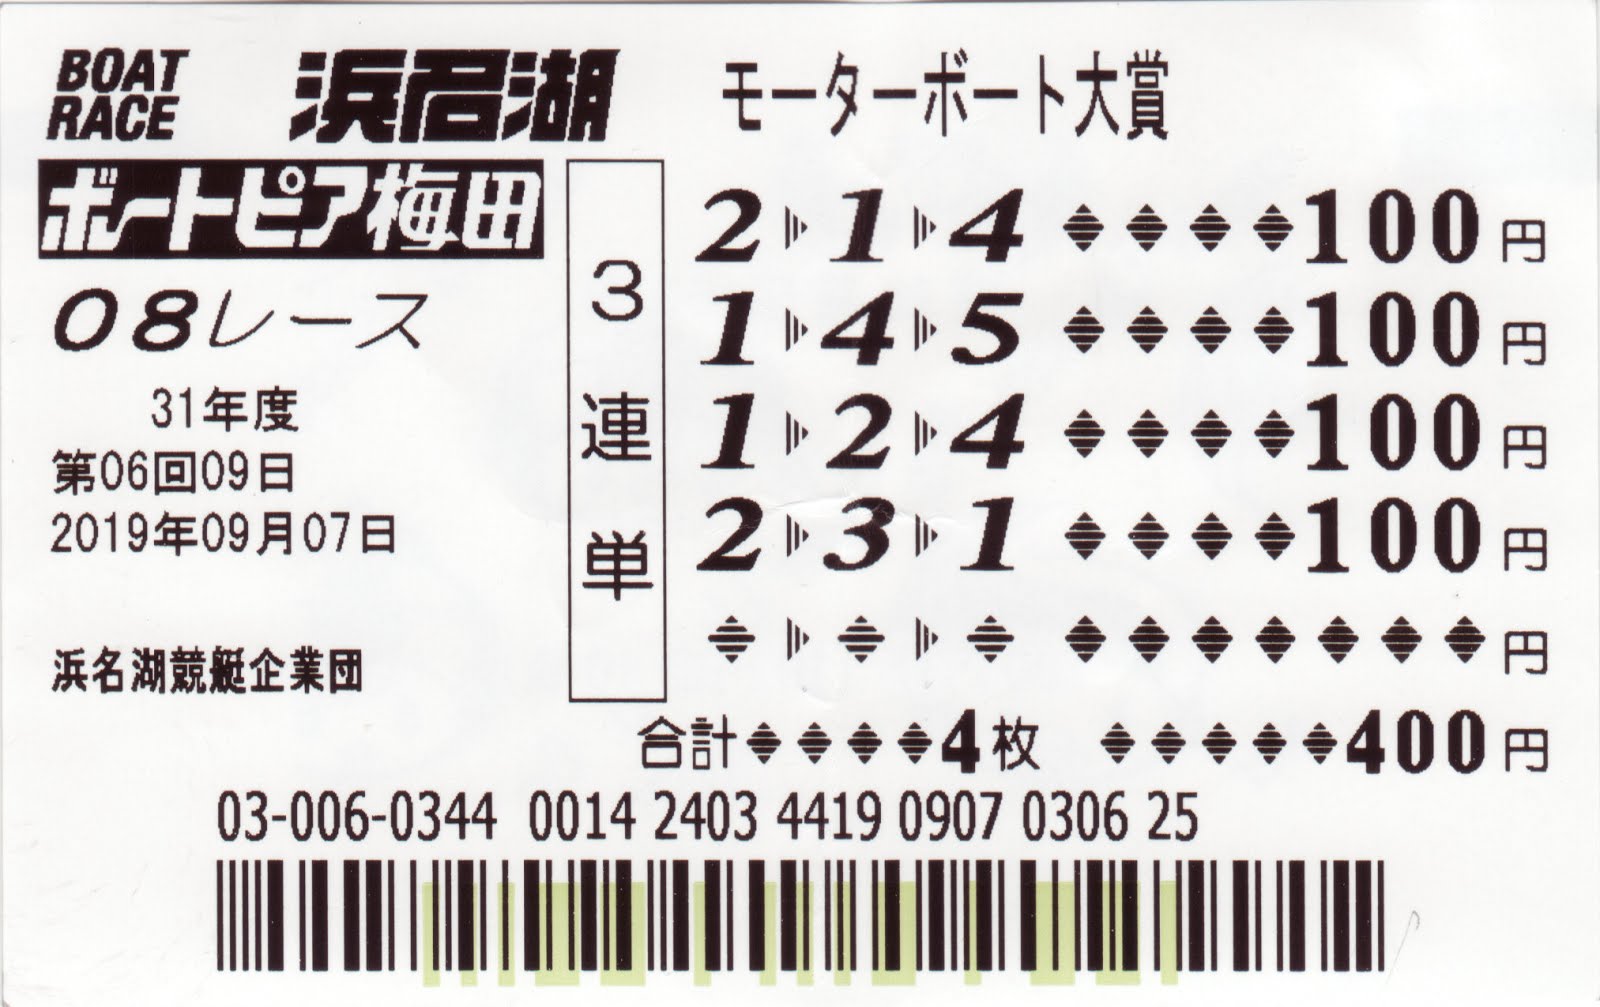 yoshi223のブログ: ボートレース/競輪/オートレースの投票券(車券/舟券)・投票カード・払戻機